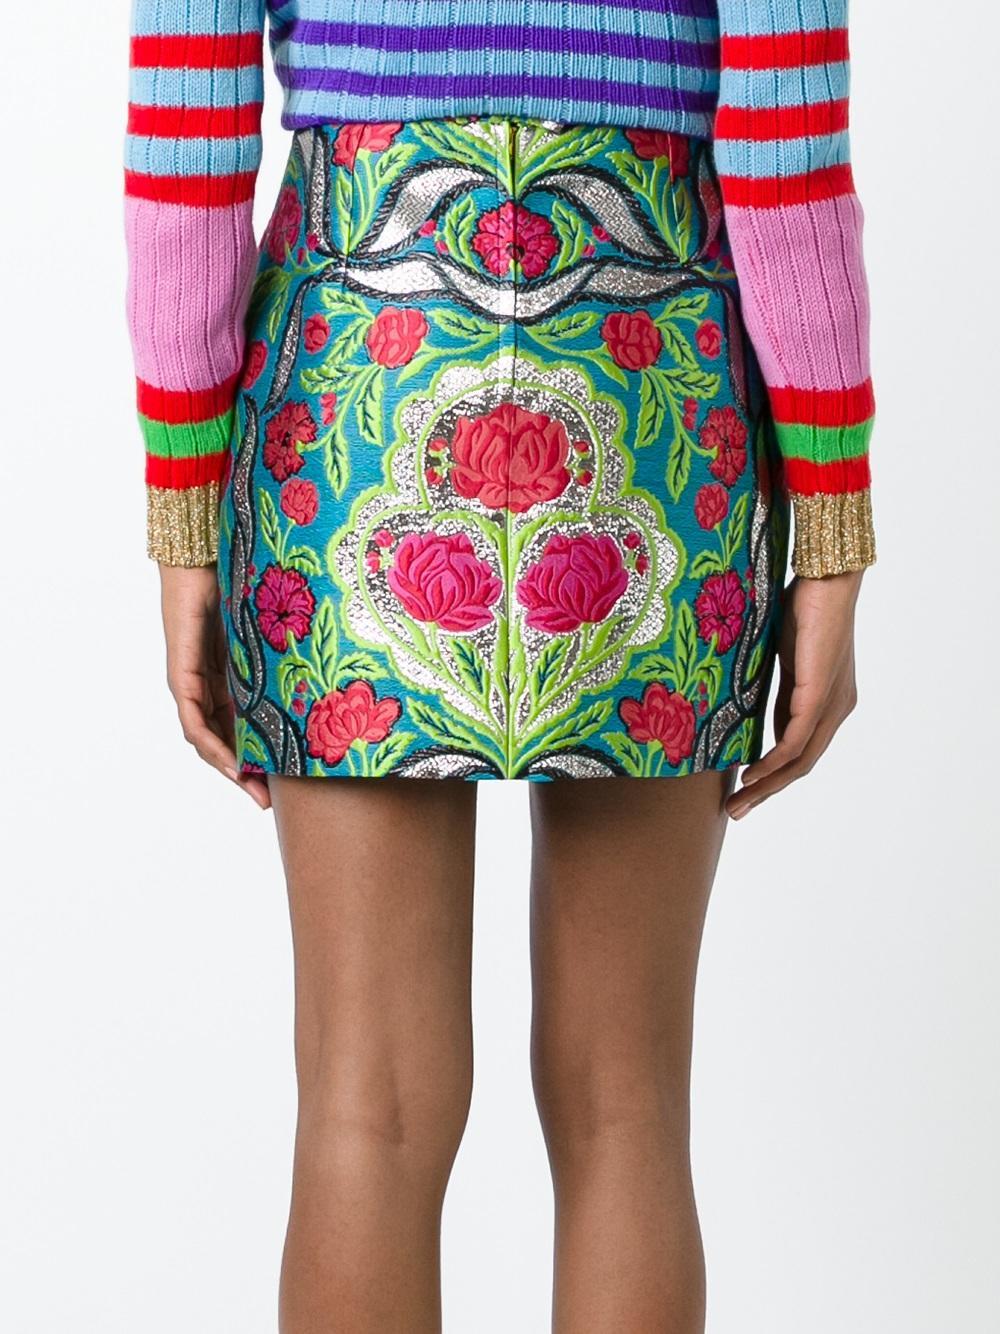 Lyst - Gucci Floral Brocade Mini Skirt in Metallic